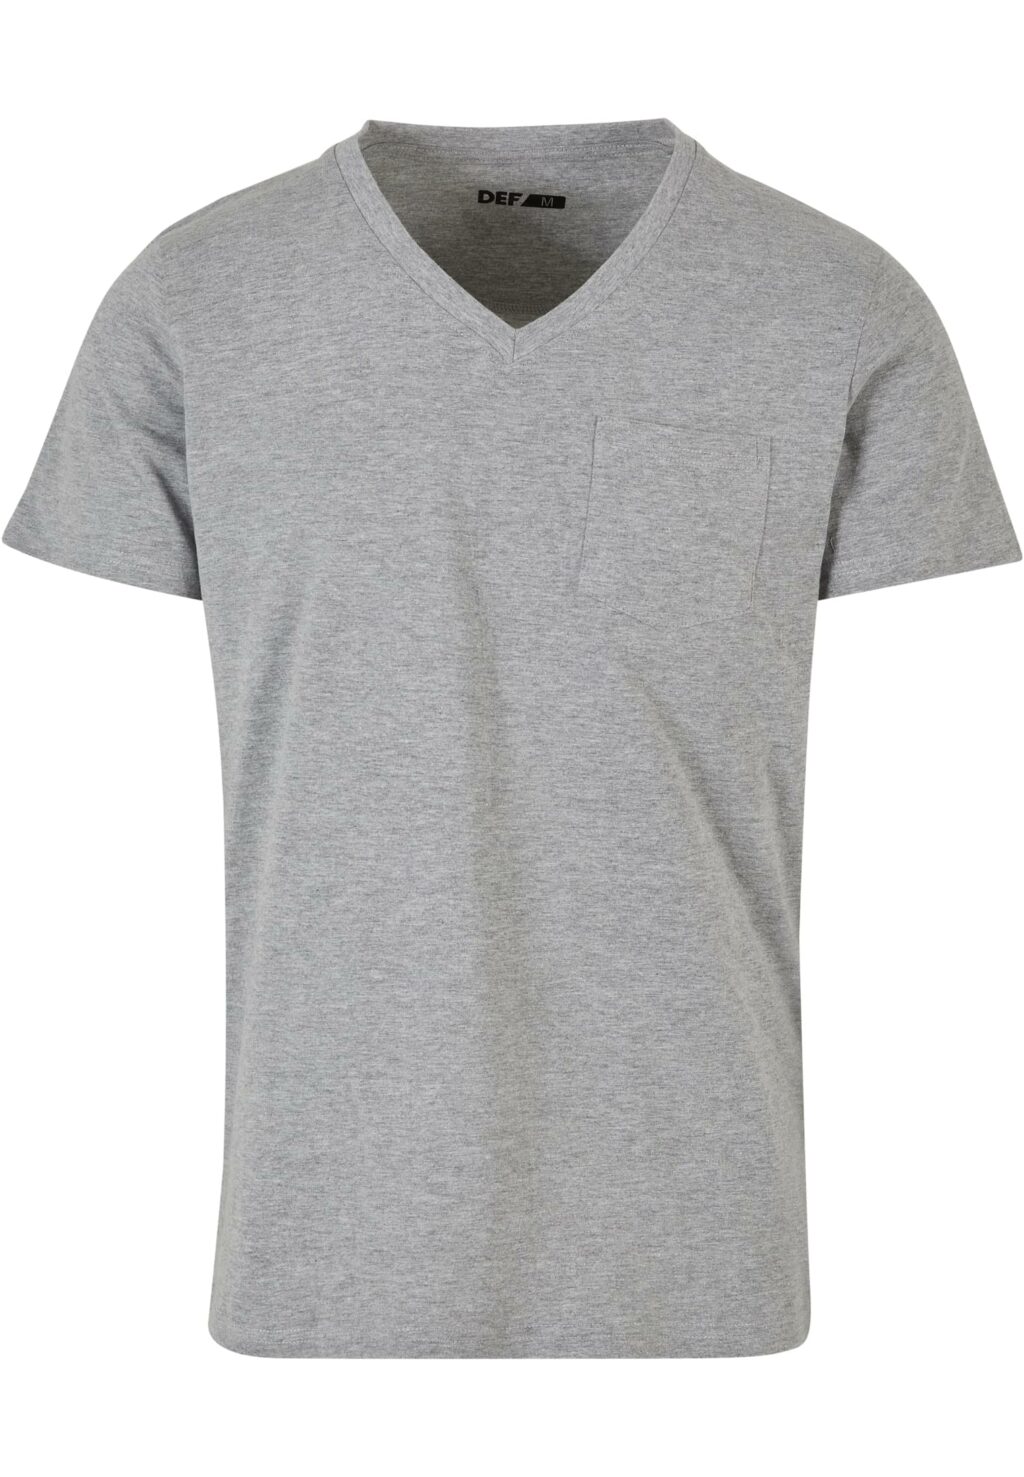 T-Shirt grey DFTS035